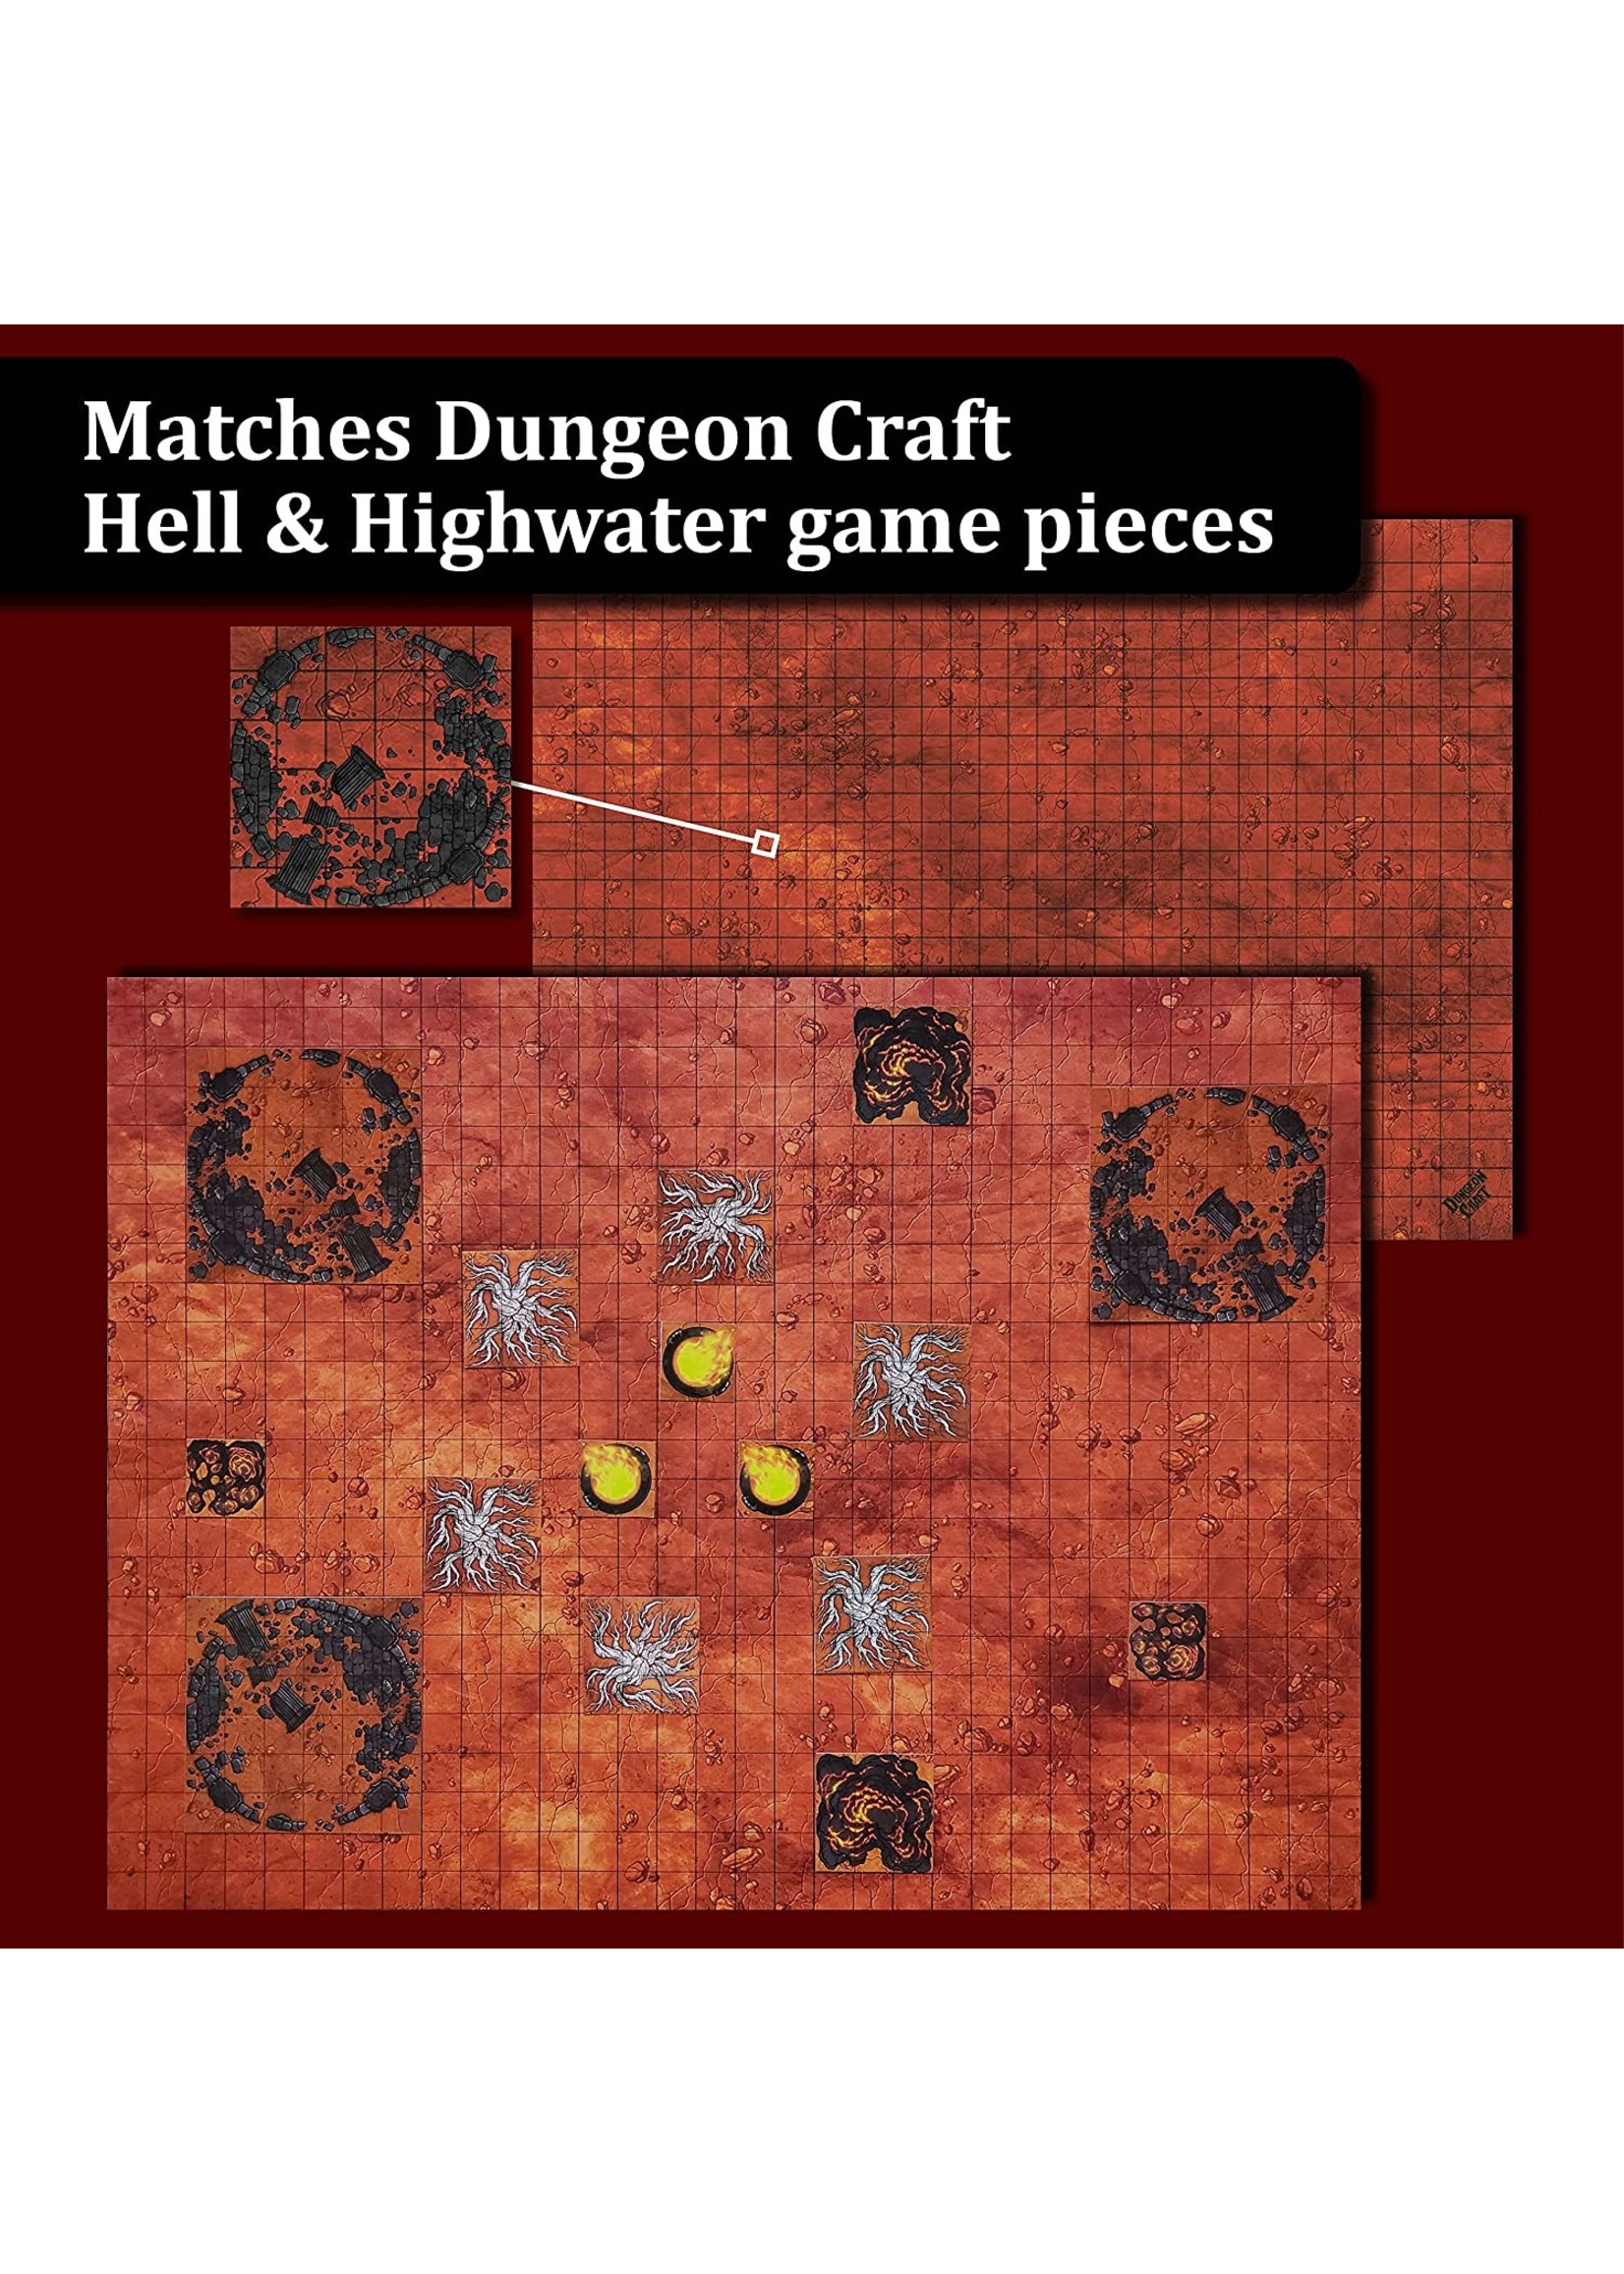 1985 Games Dungeon Craft Battlemaps: Hell